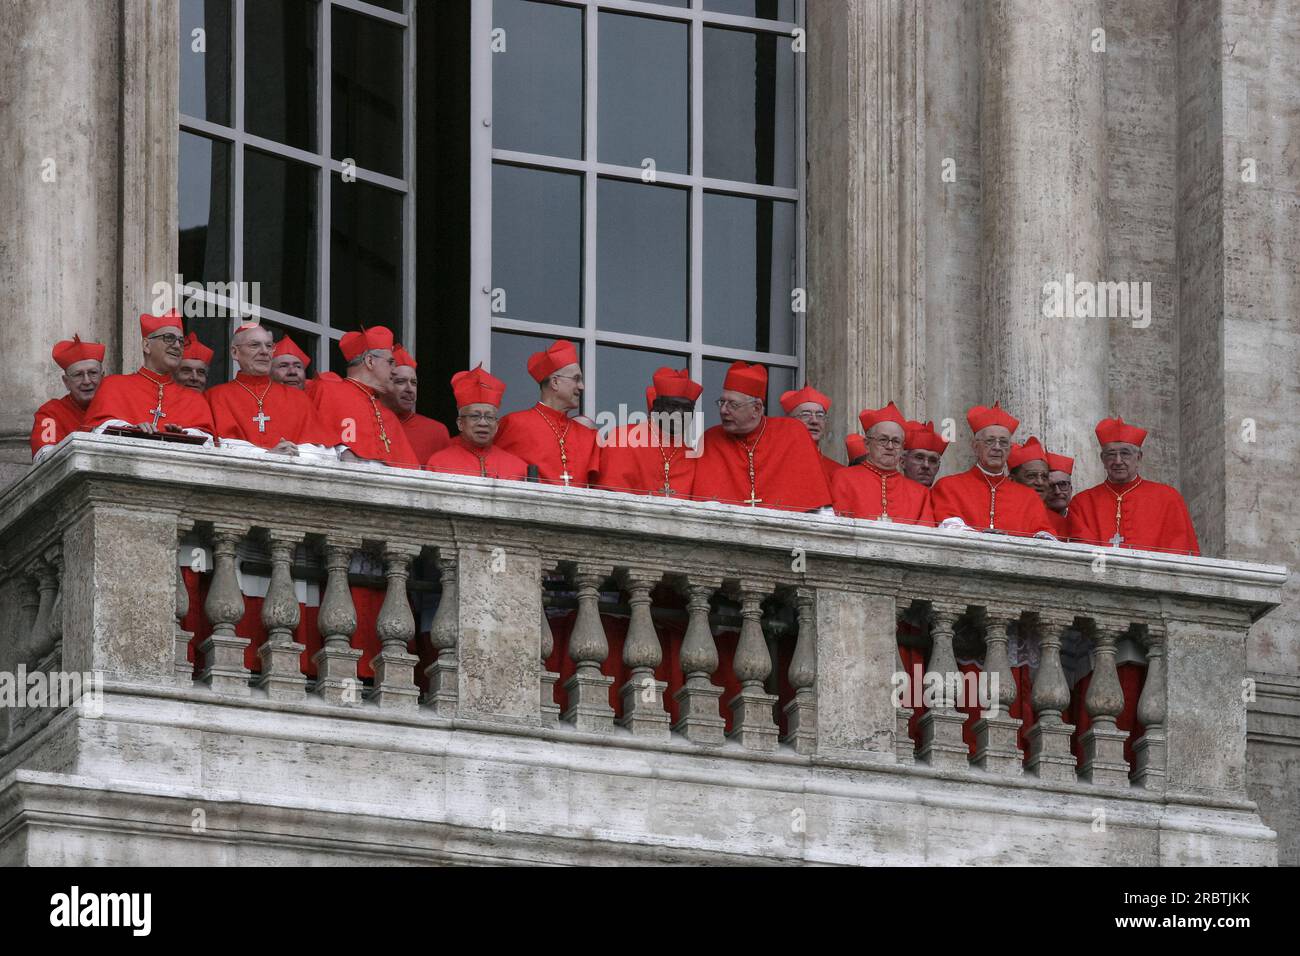 Vatikan, 19. April 2005. Petersplatz. Kardinäle beobachten die Gläubigen nach der Wahl des neuen Papstes Benedikt XVI., Kardinal Joseph Ratzinger. Stockfoto